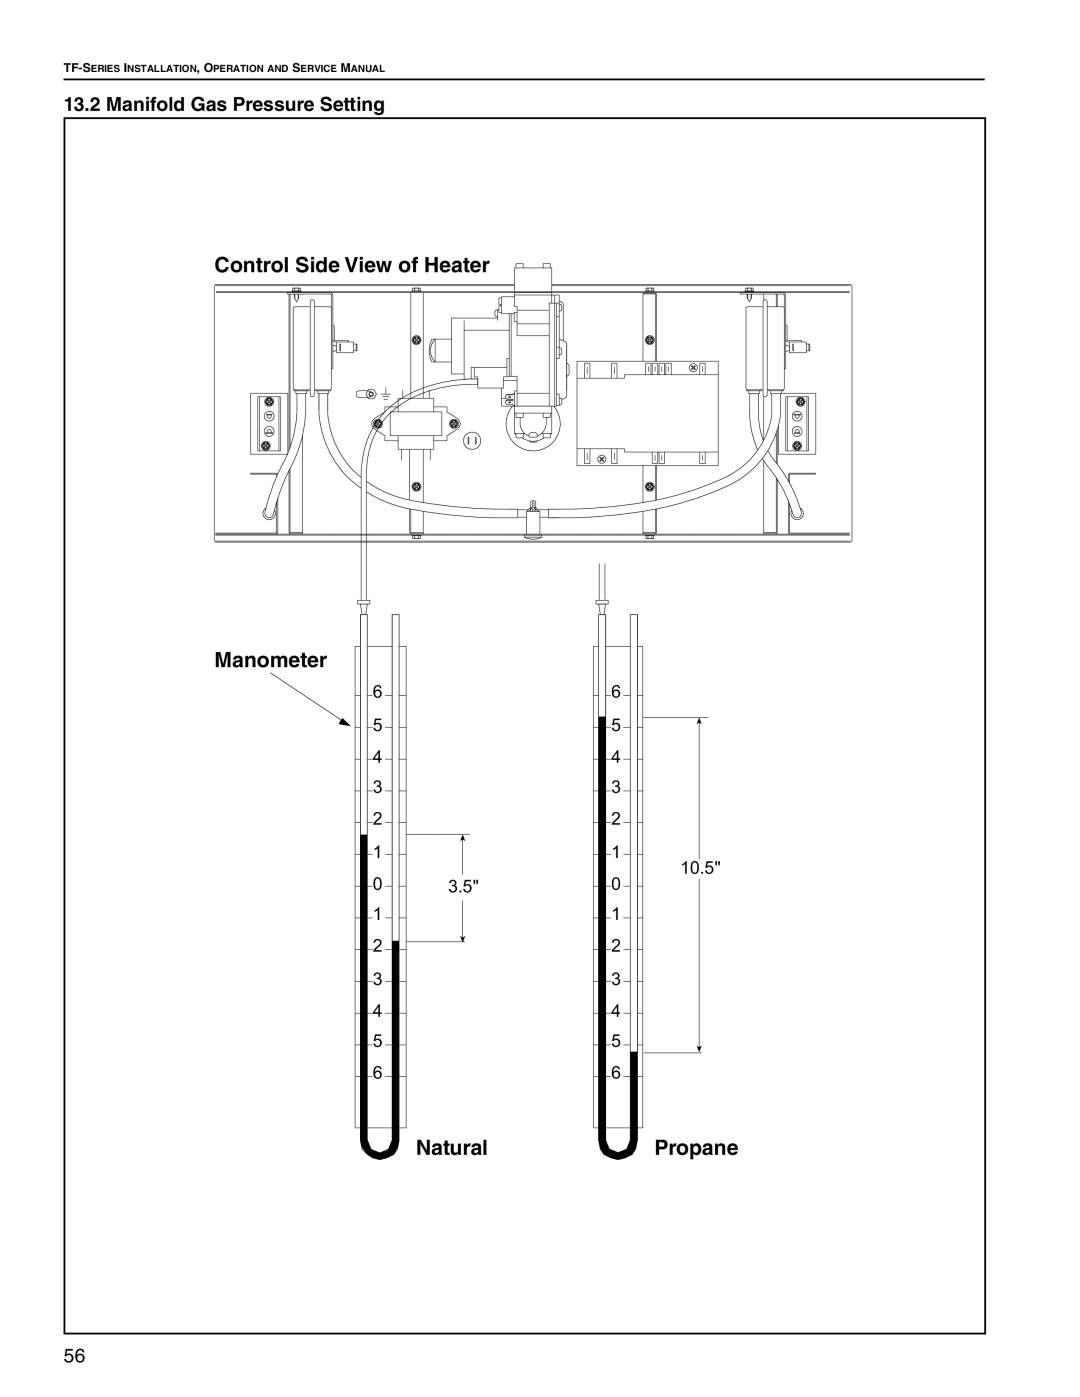 Roberts Gorden TF-380, TF-350, TF-300 Control Side View of Heater, Manometer, NaturalPropane, Manifold Gas Pressure Setting 